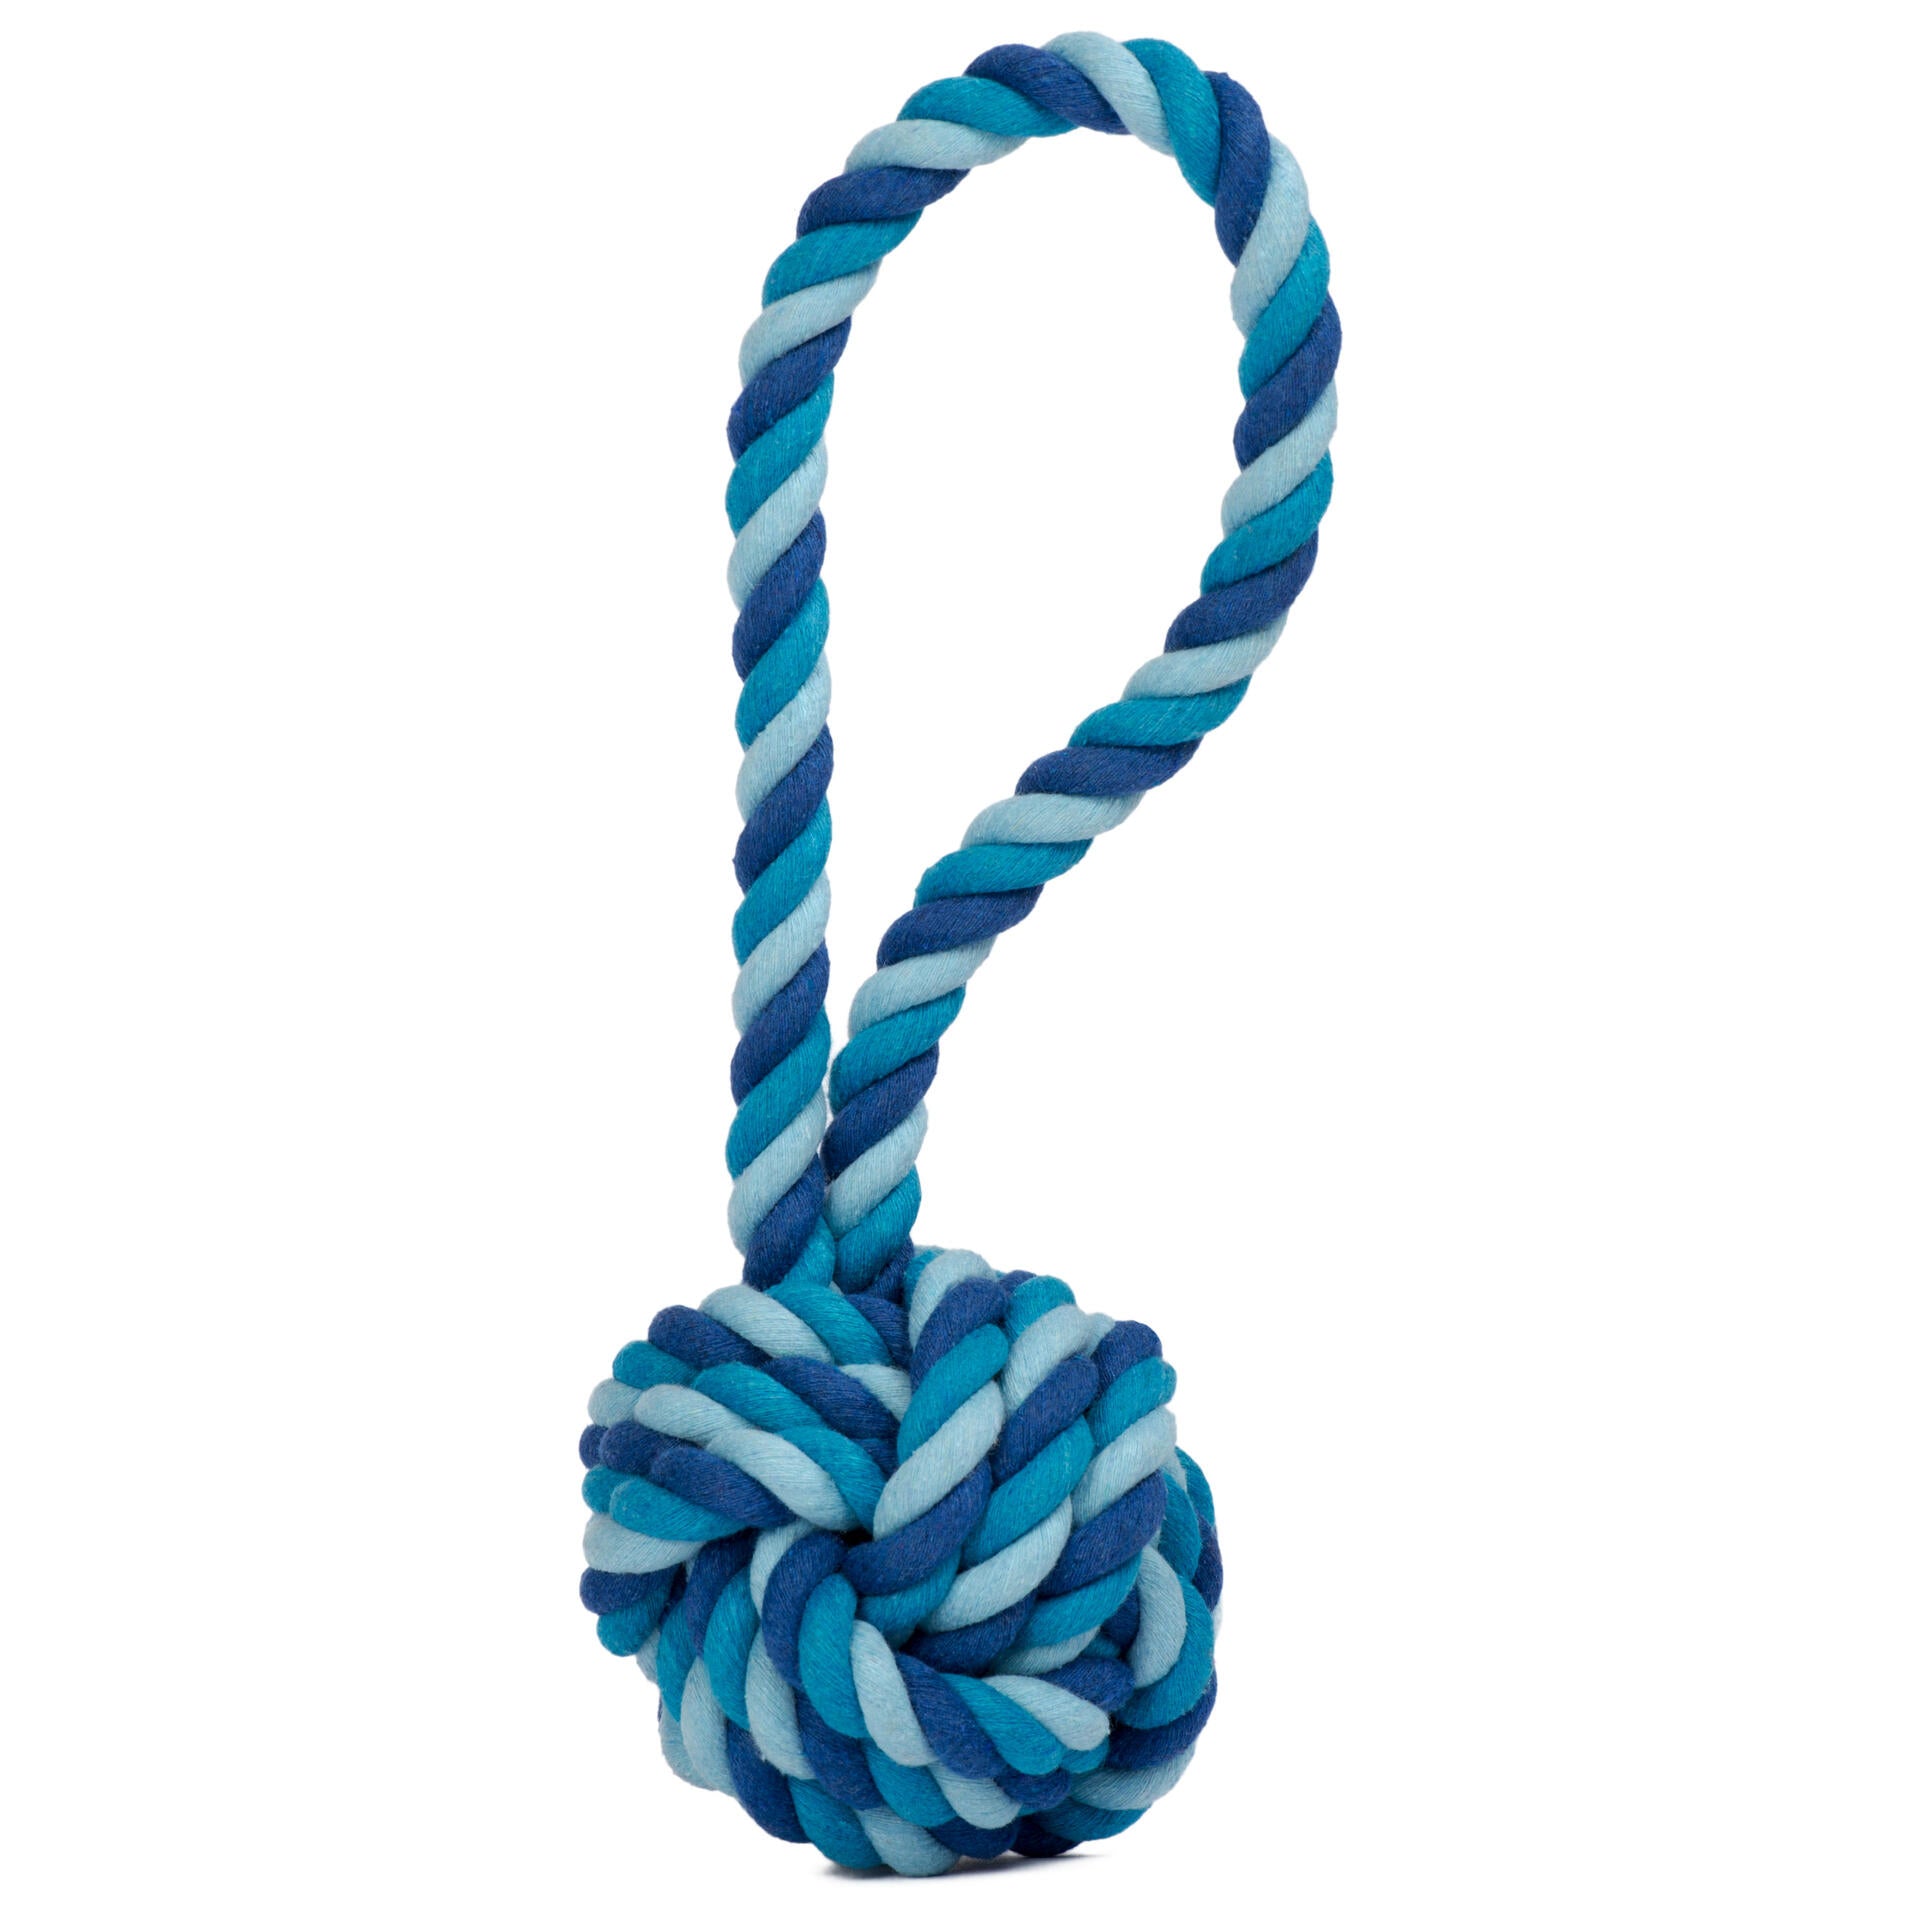 Laboni - Baumwollspielzeug "MAXI Ball mit Schlaufe" blau